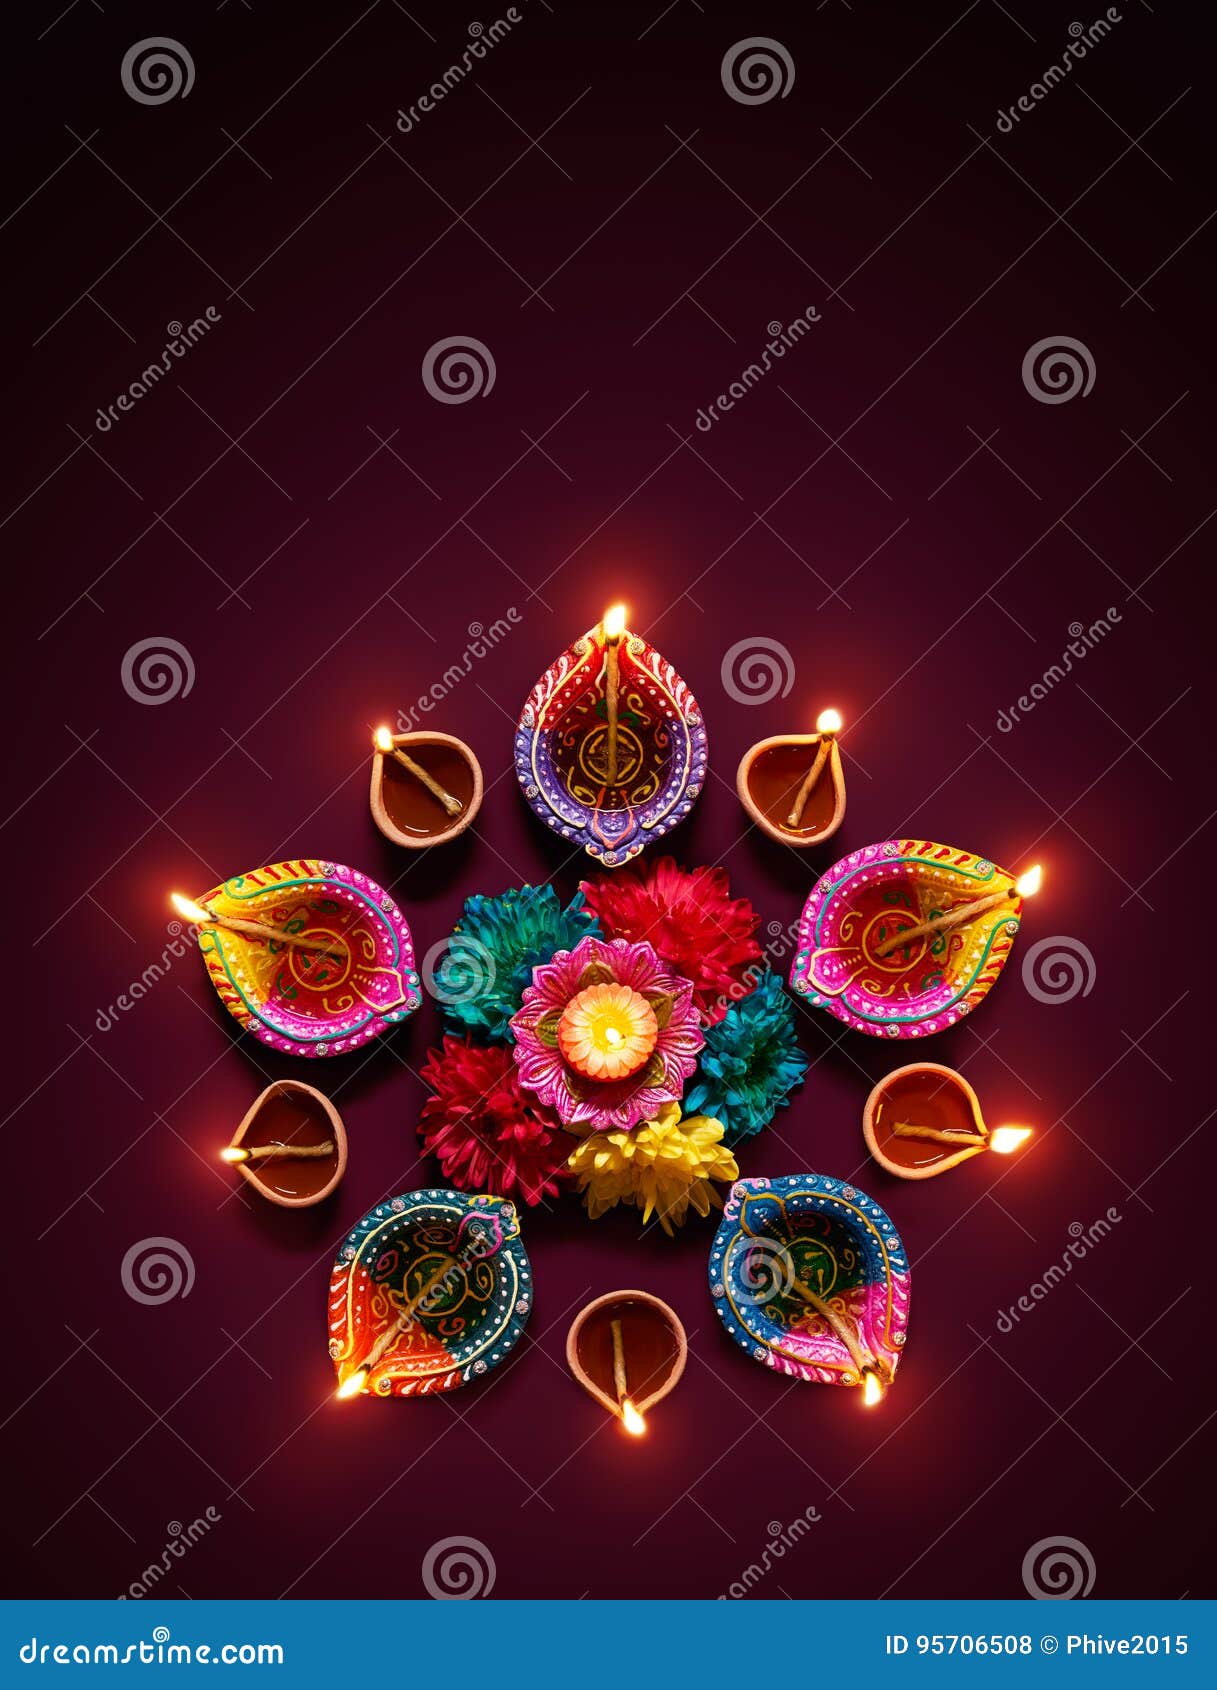 14,372 Colorful Diwali Stock Photos - Free & Royalty-Free Stock ...